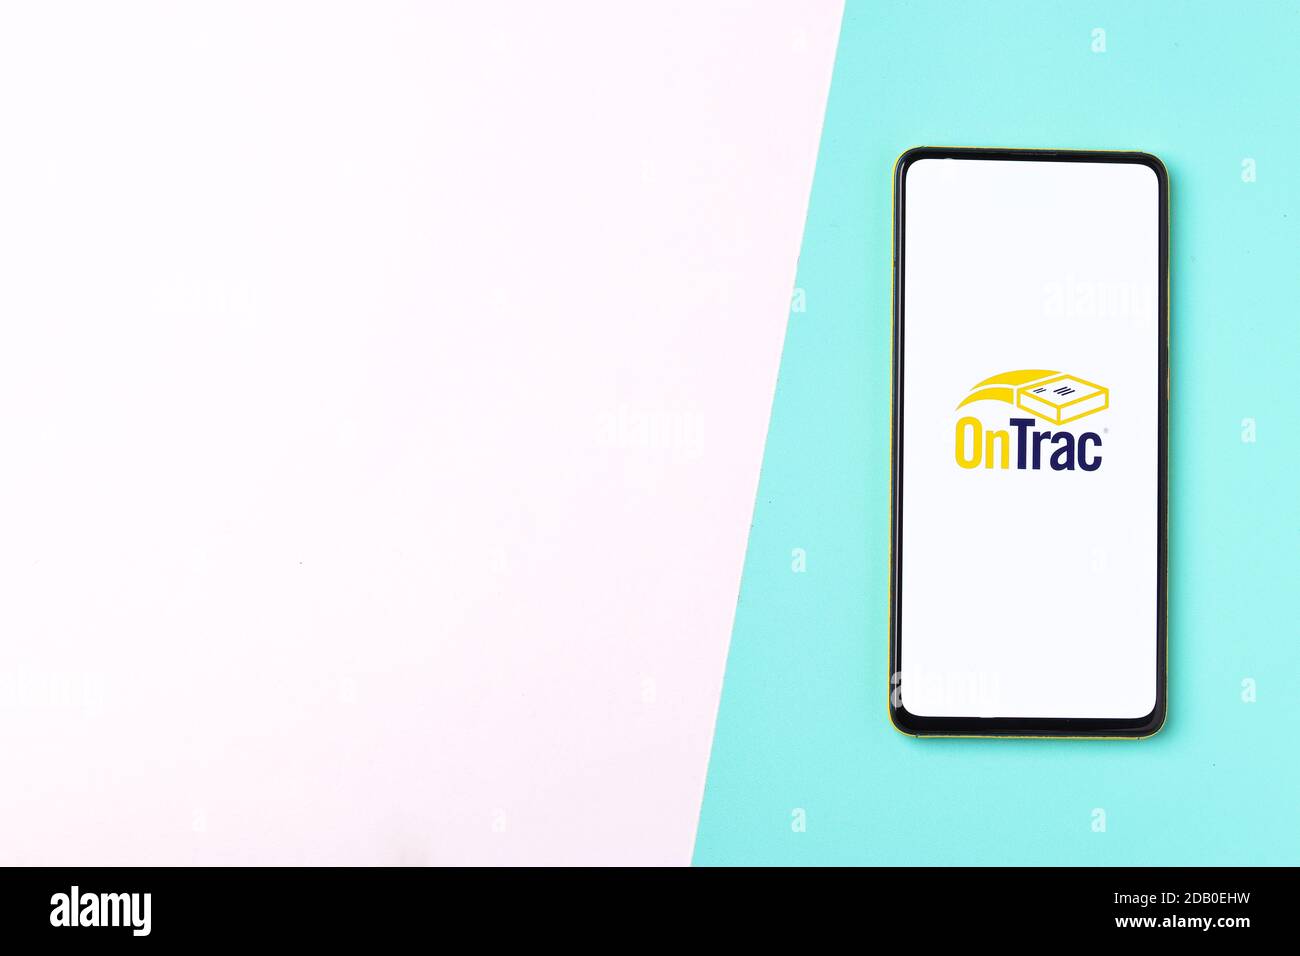 Assam, indien - November 15, 2020 : Ontrac Logo auf Handy-Bildschirm Stock Bild. Stockfoto